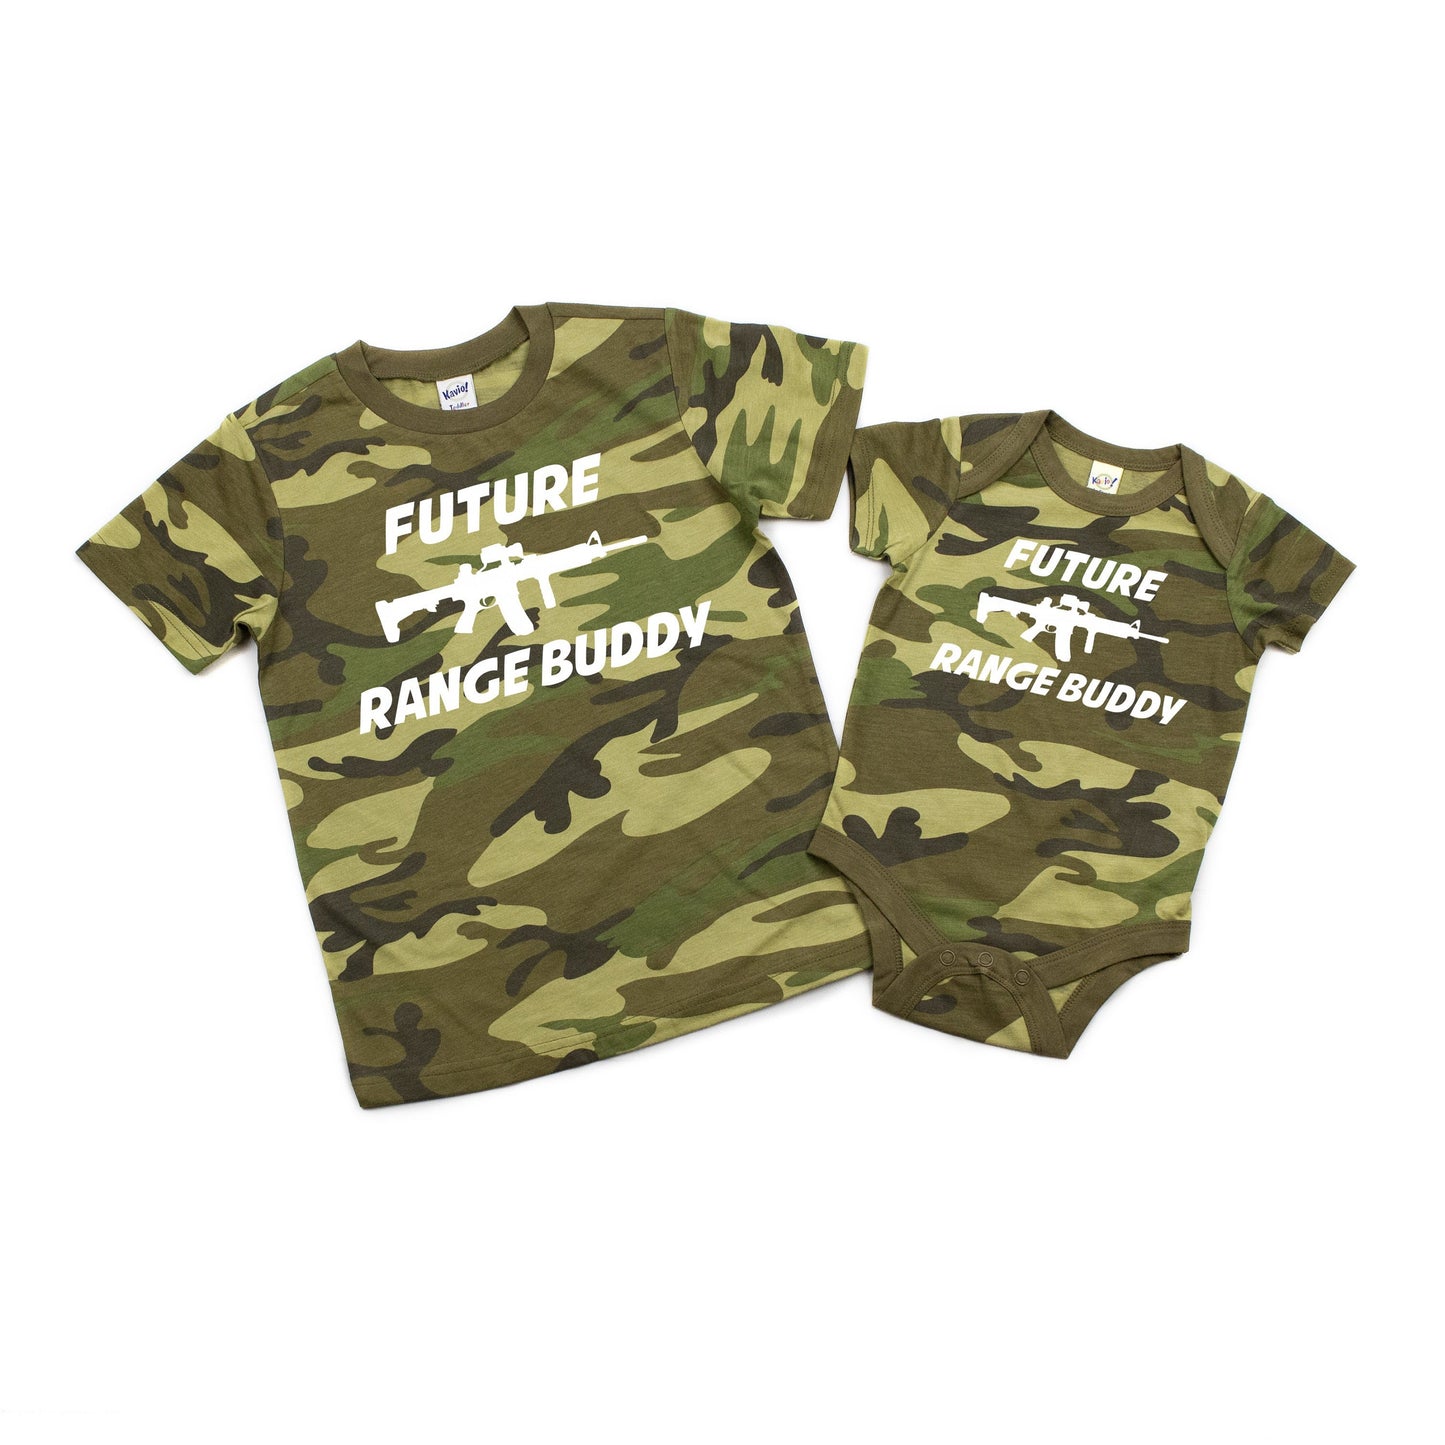 Future Range Buddy Camo Infant or Youth Shirt or Bodysuit - Baby Boy Shirt - Shooting Range - Molon Labe - 2nd Amendment Shirt for Kids